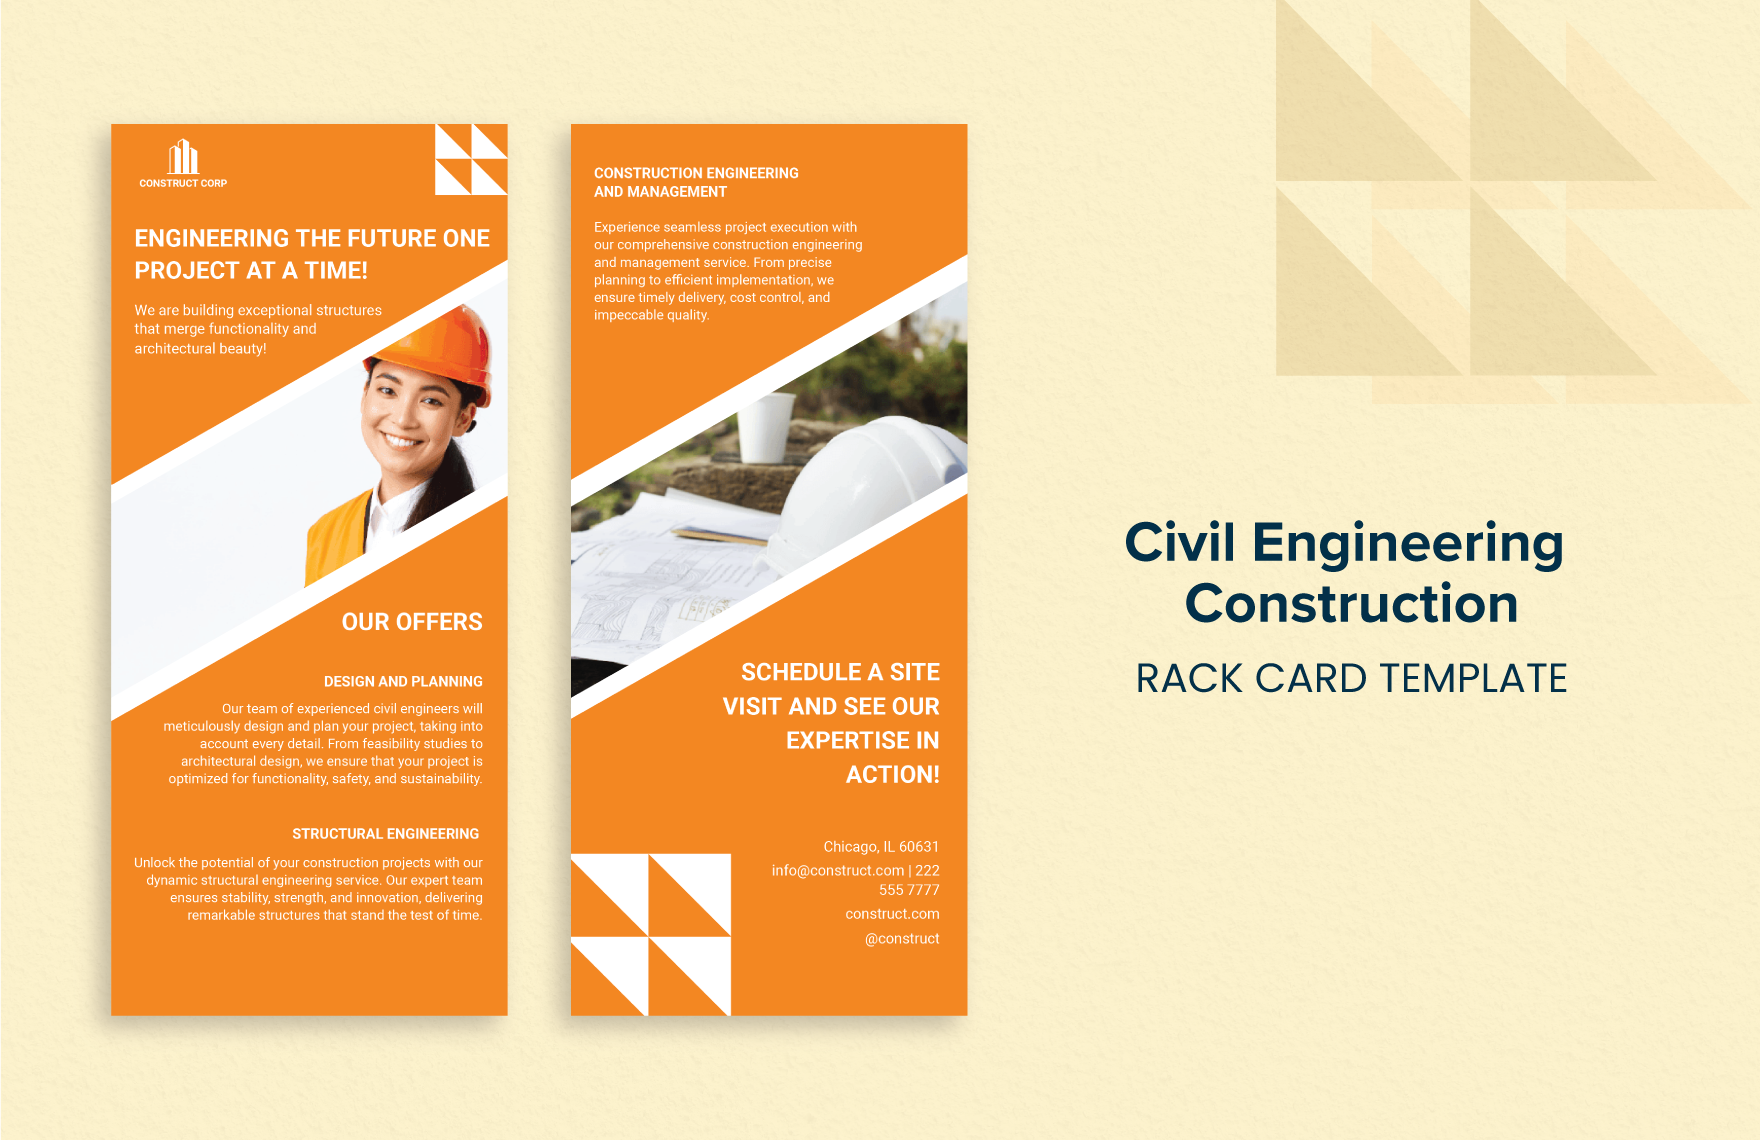 Civil Engineering Construction Rack Card Template